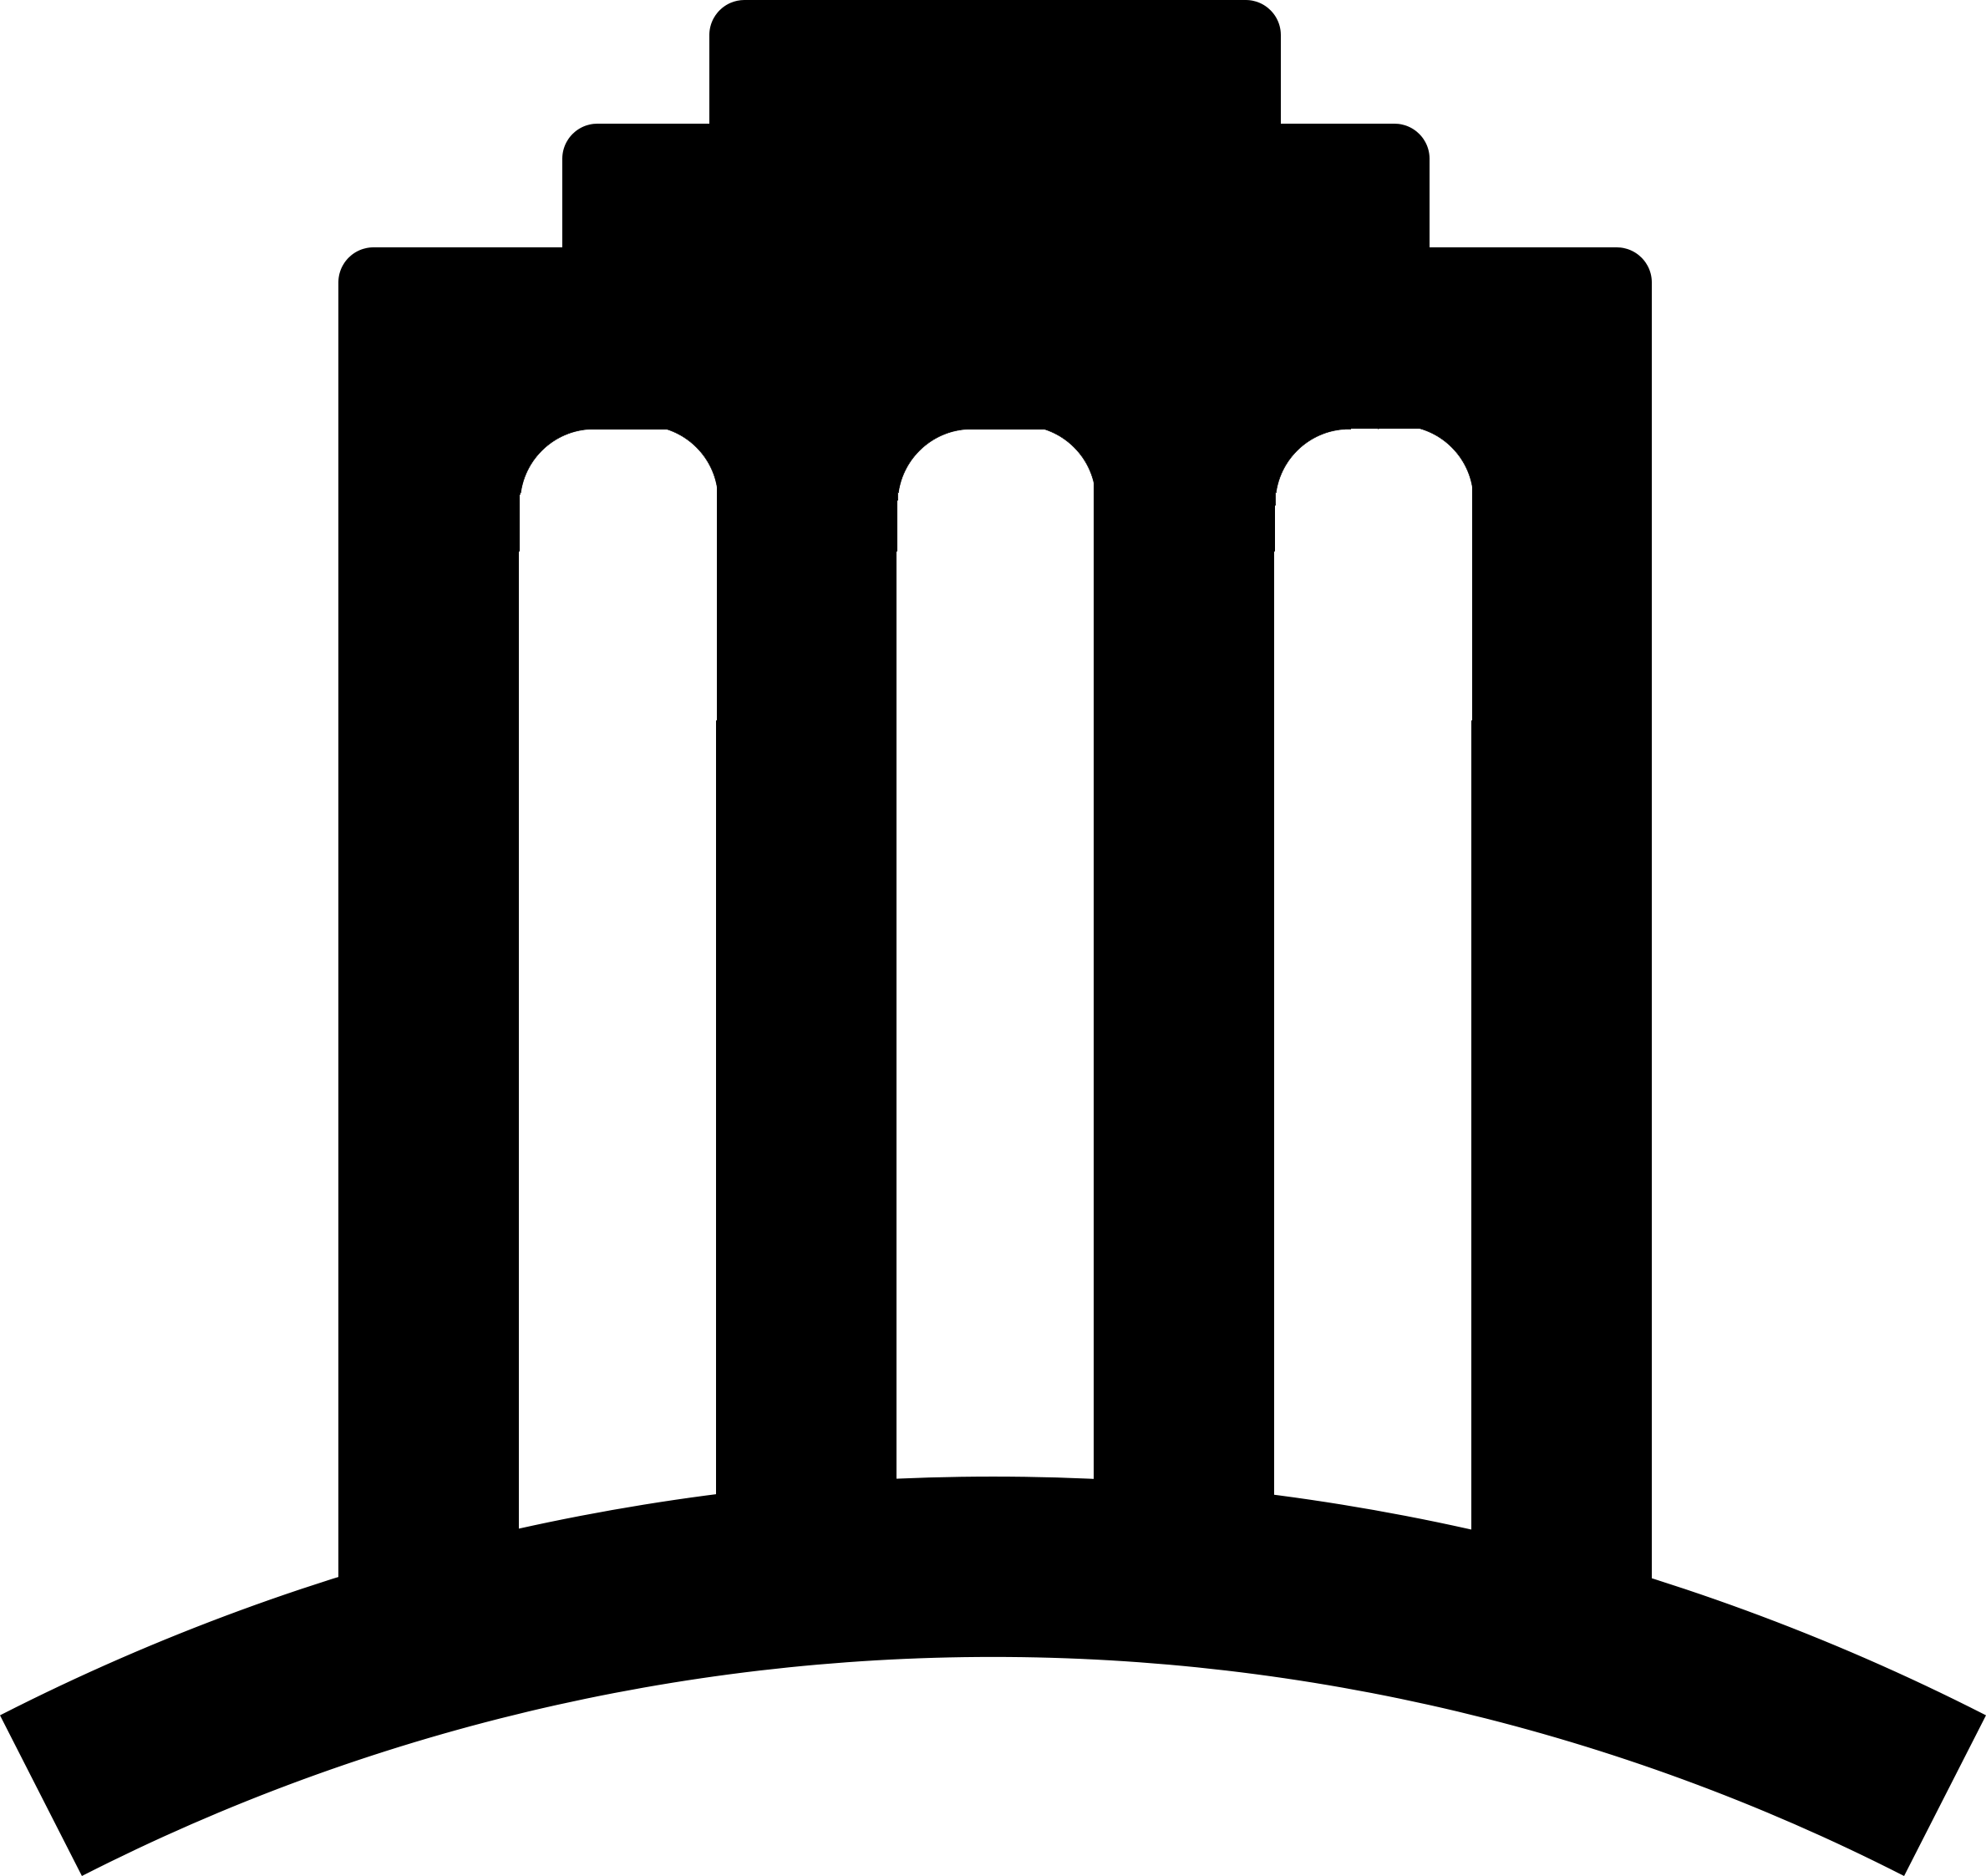 Delf research's logo in black